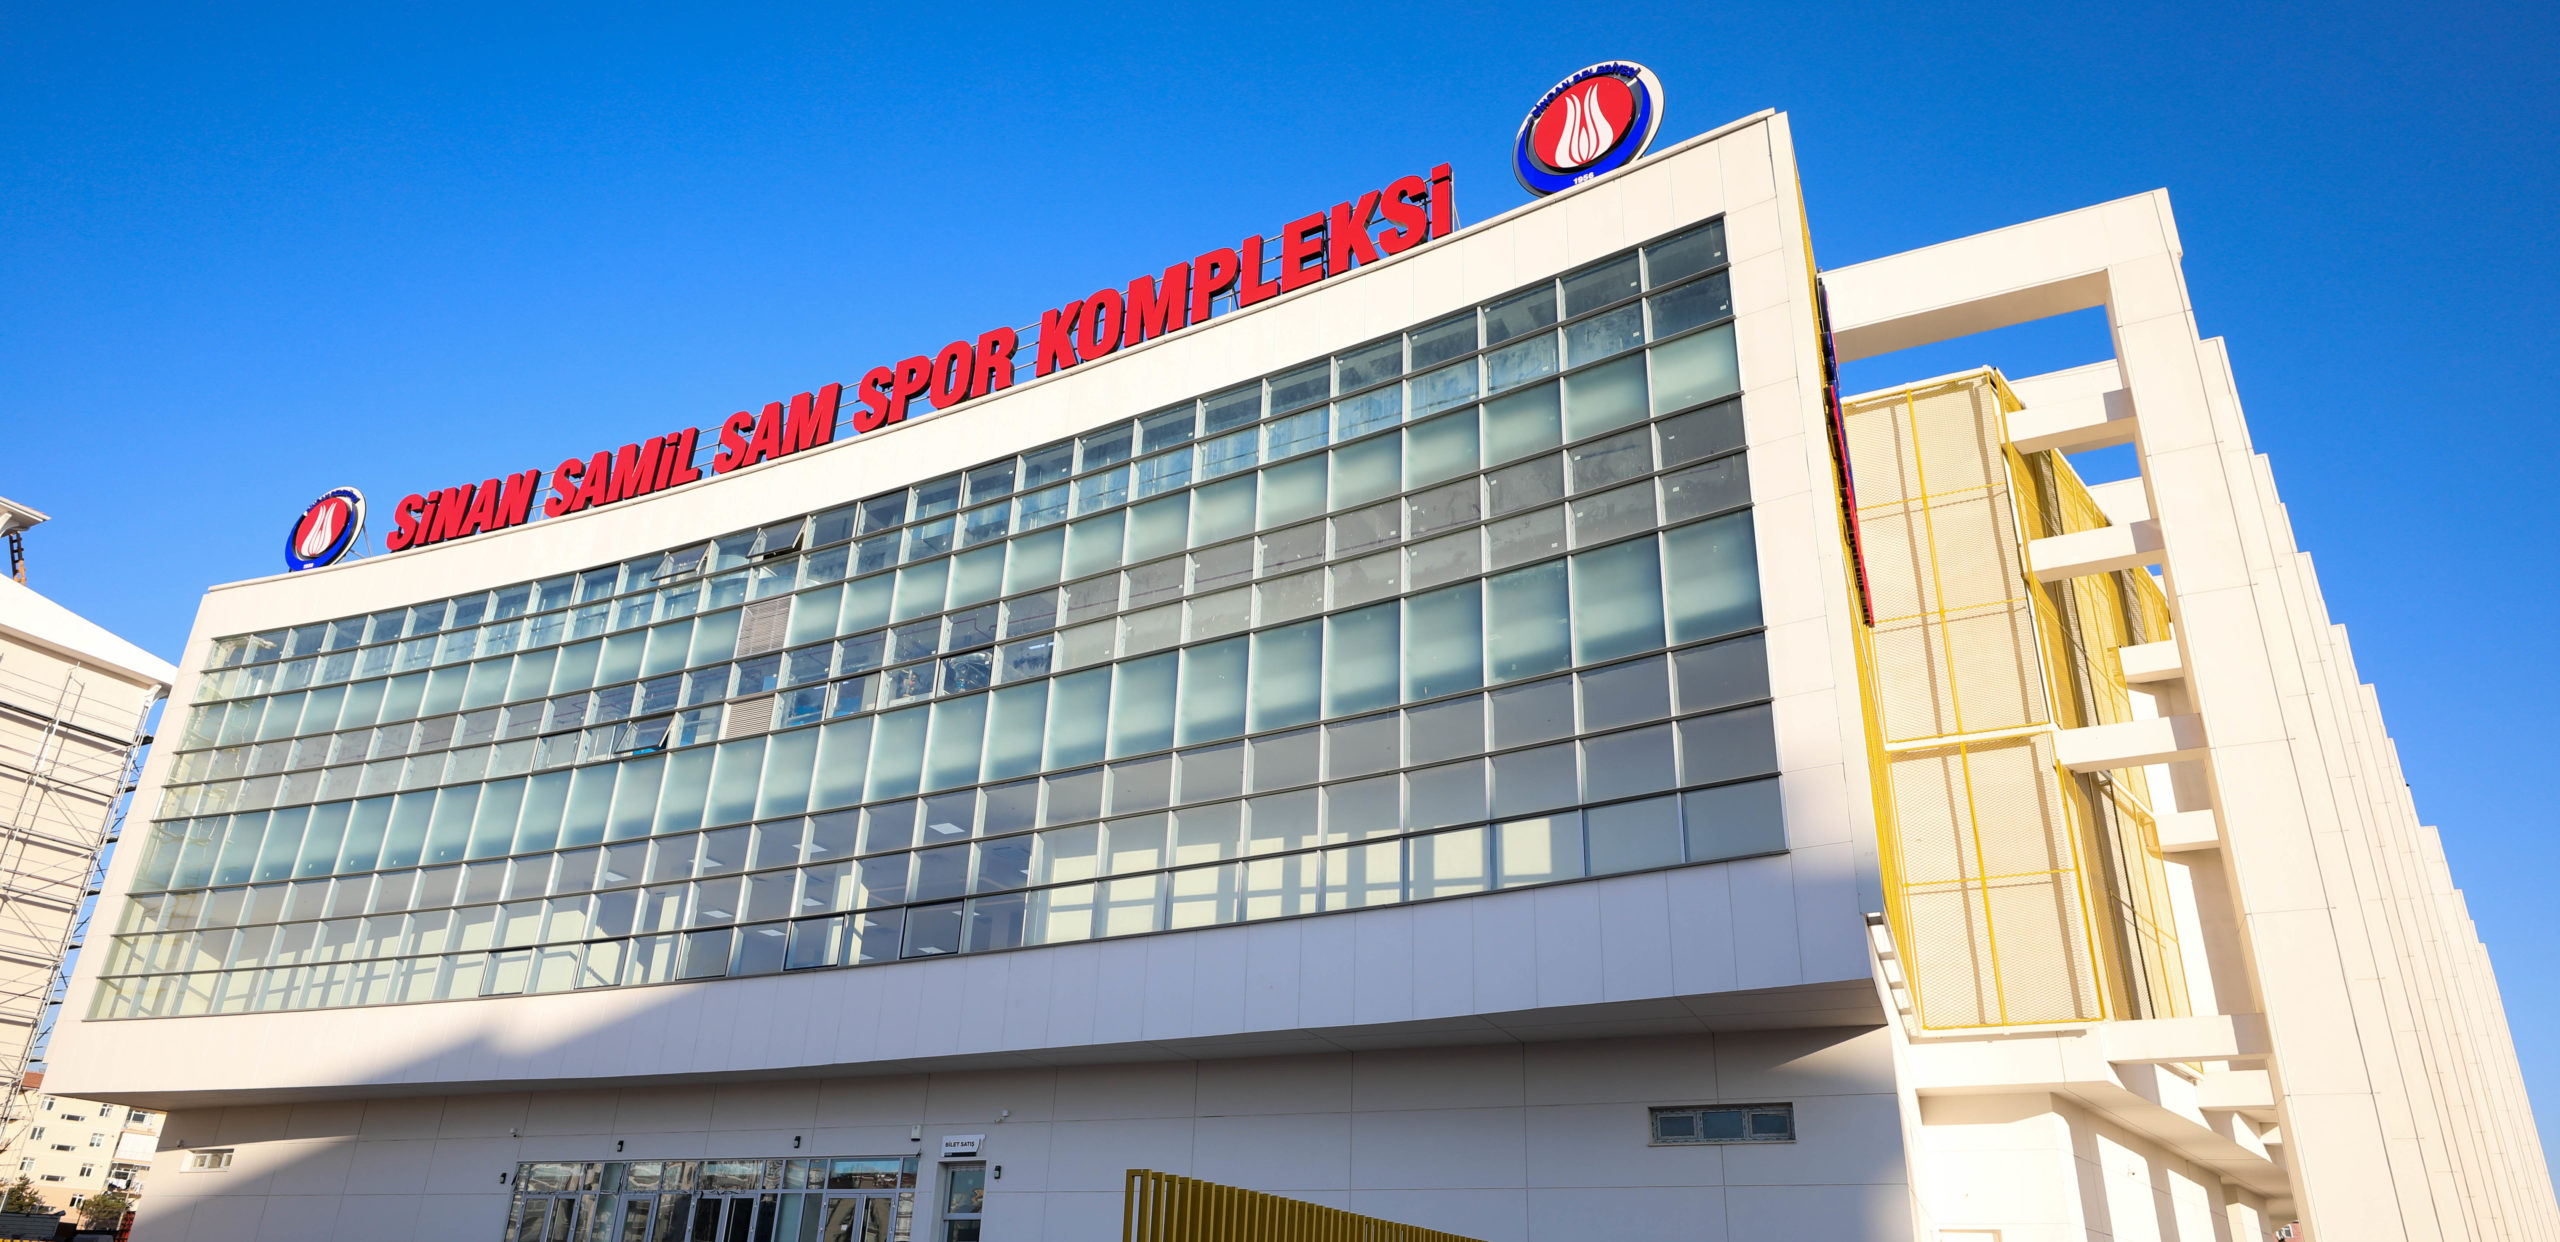  Sincan’da Sinan Şamil Sam Kapalı Spor Salonu Tamamlandı